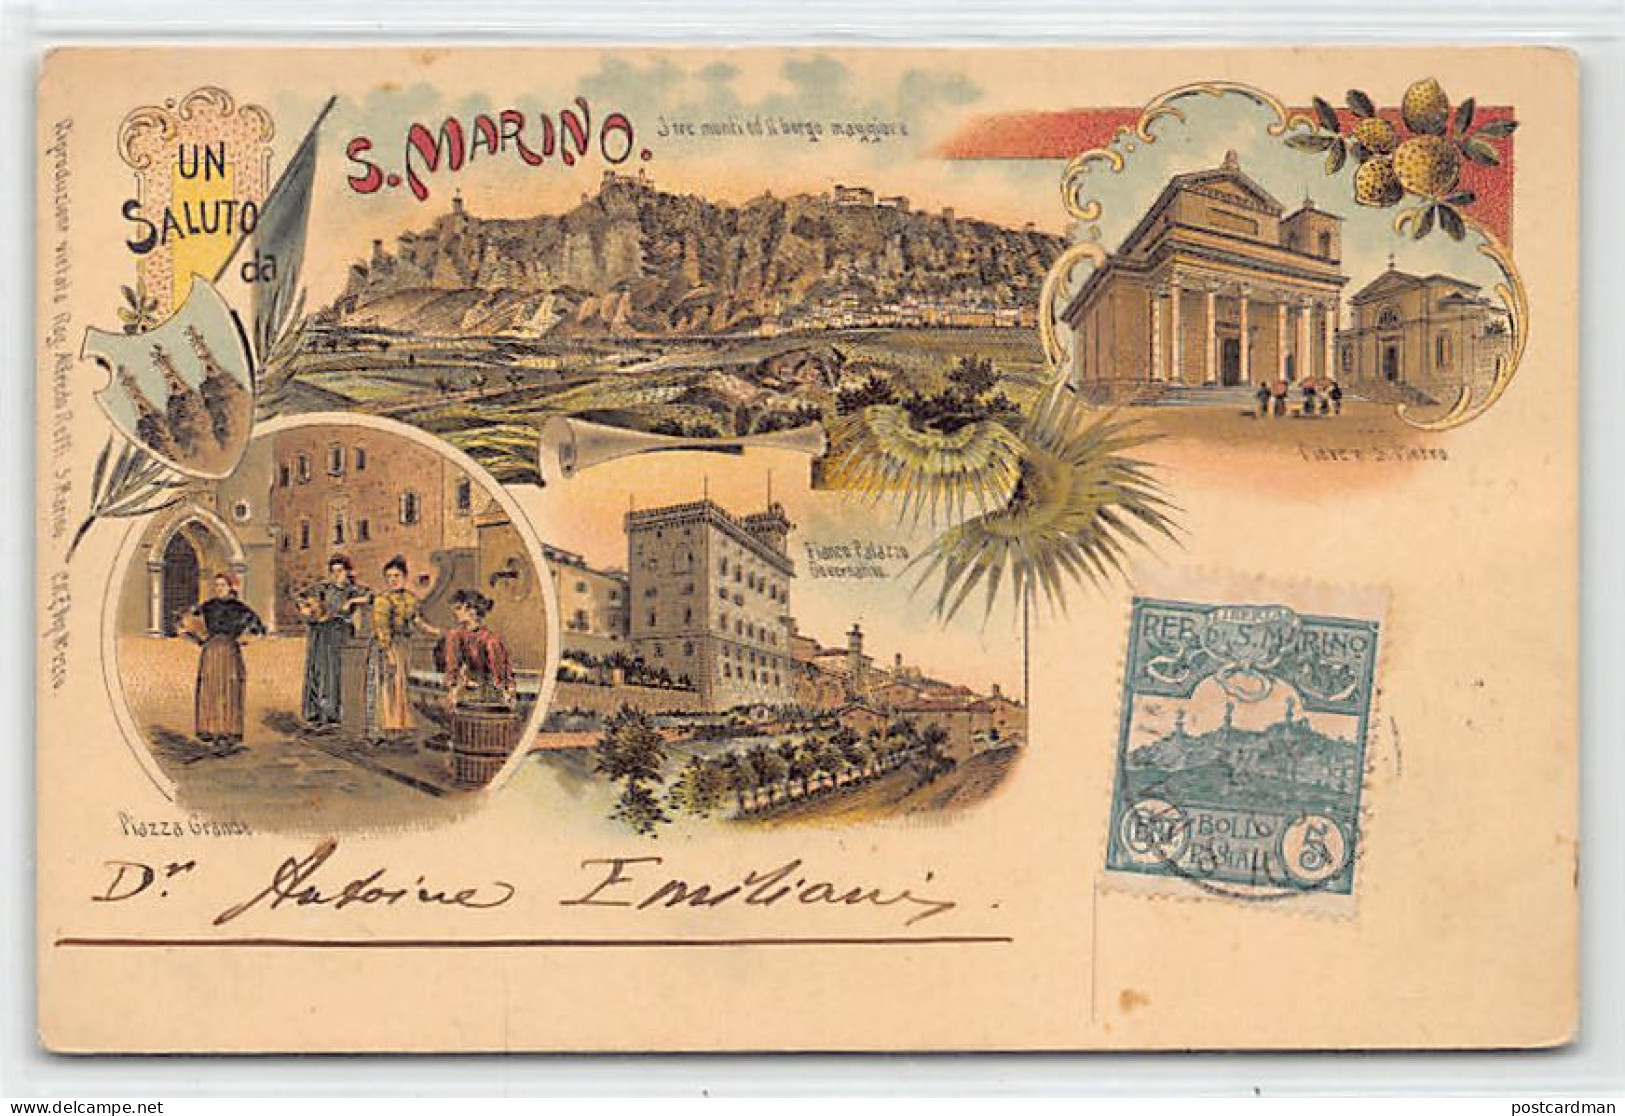 SAN MARINO - Un Saluto Da - LITHO Litografia - Ed. Alfredo Reffi - Künzli - San Marino